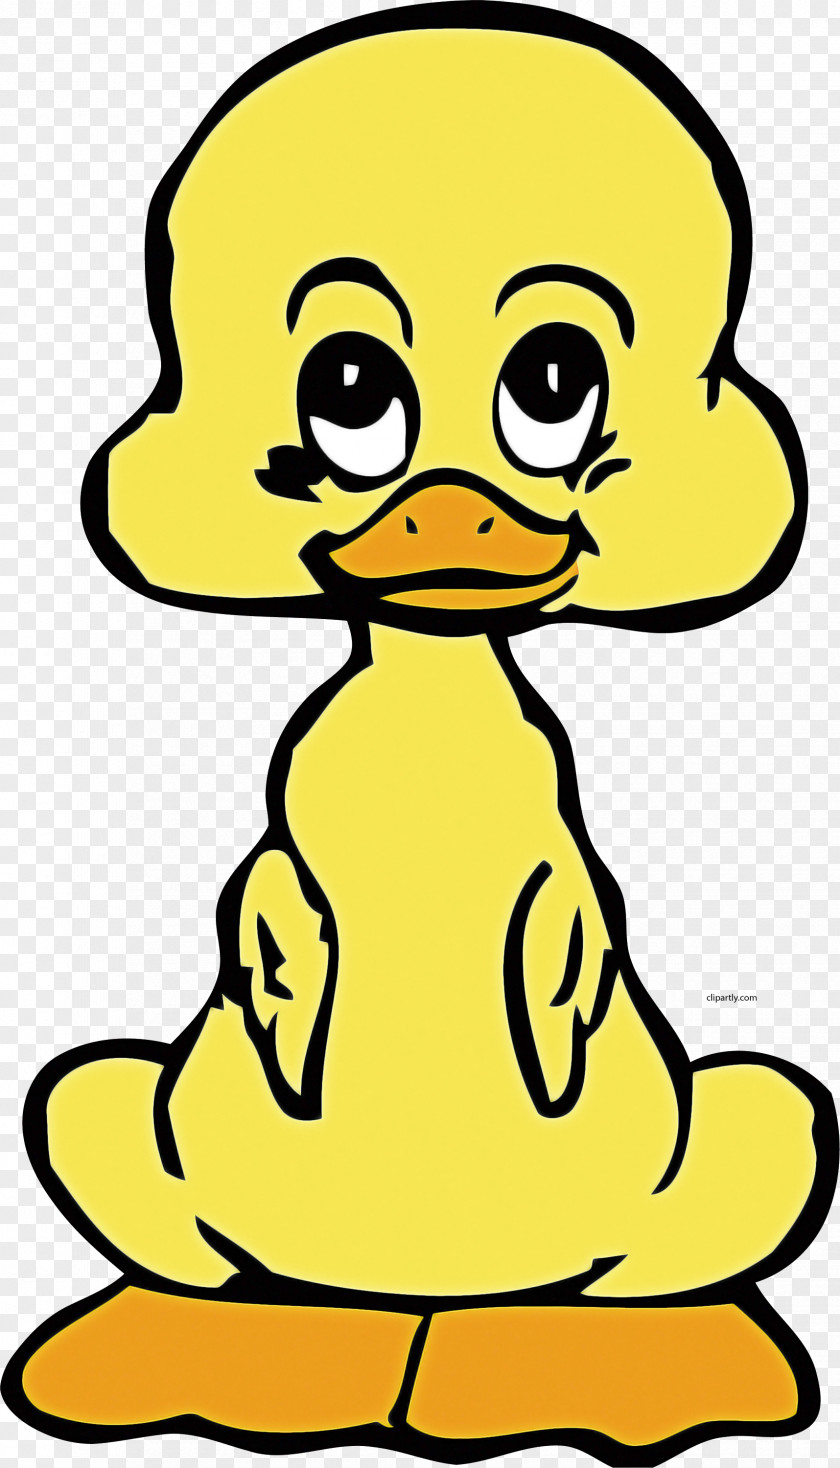 Water Bird Beak Yellow Cartoon Ducks, Geese And Swans Head PNG